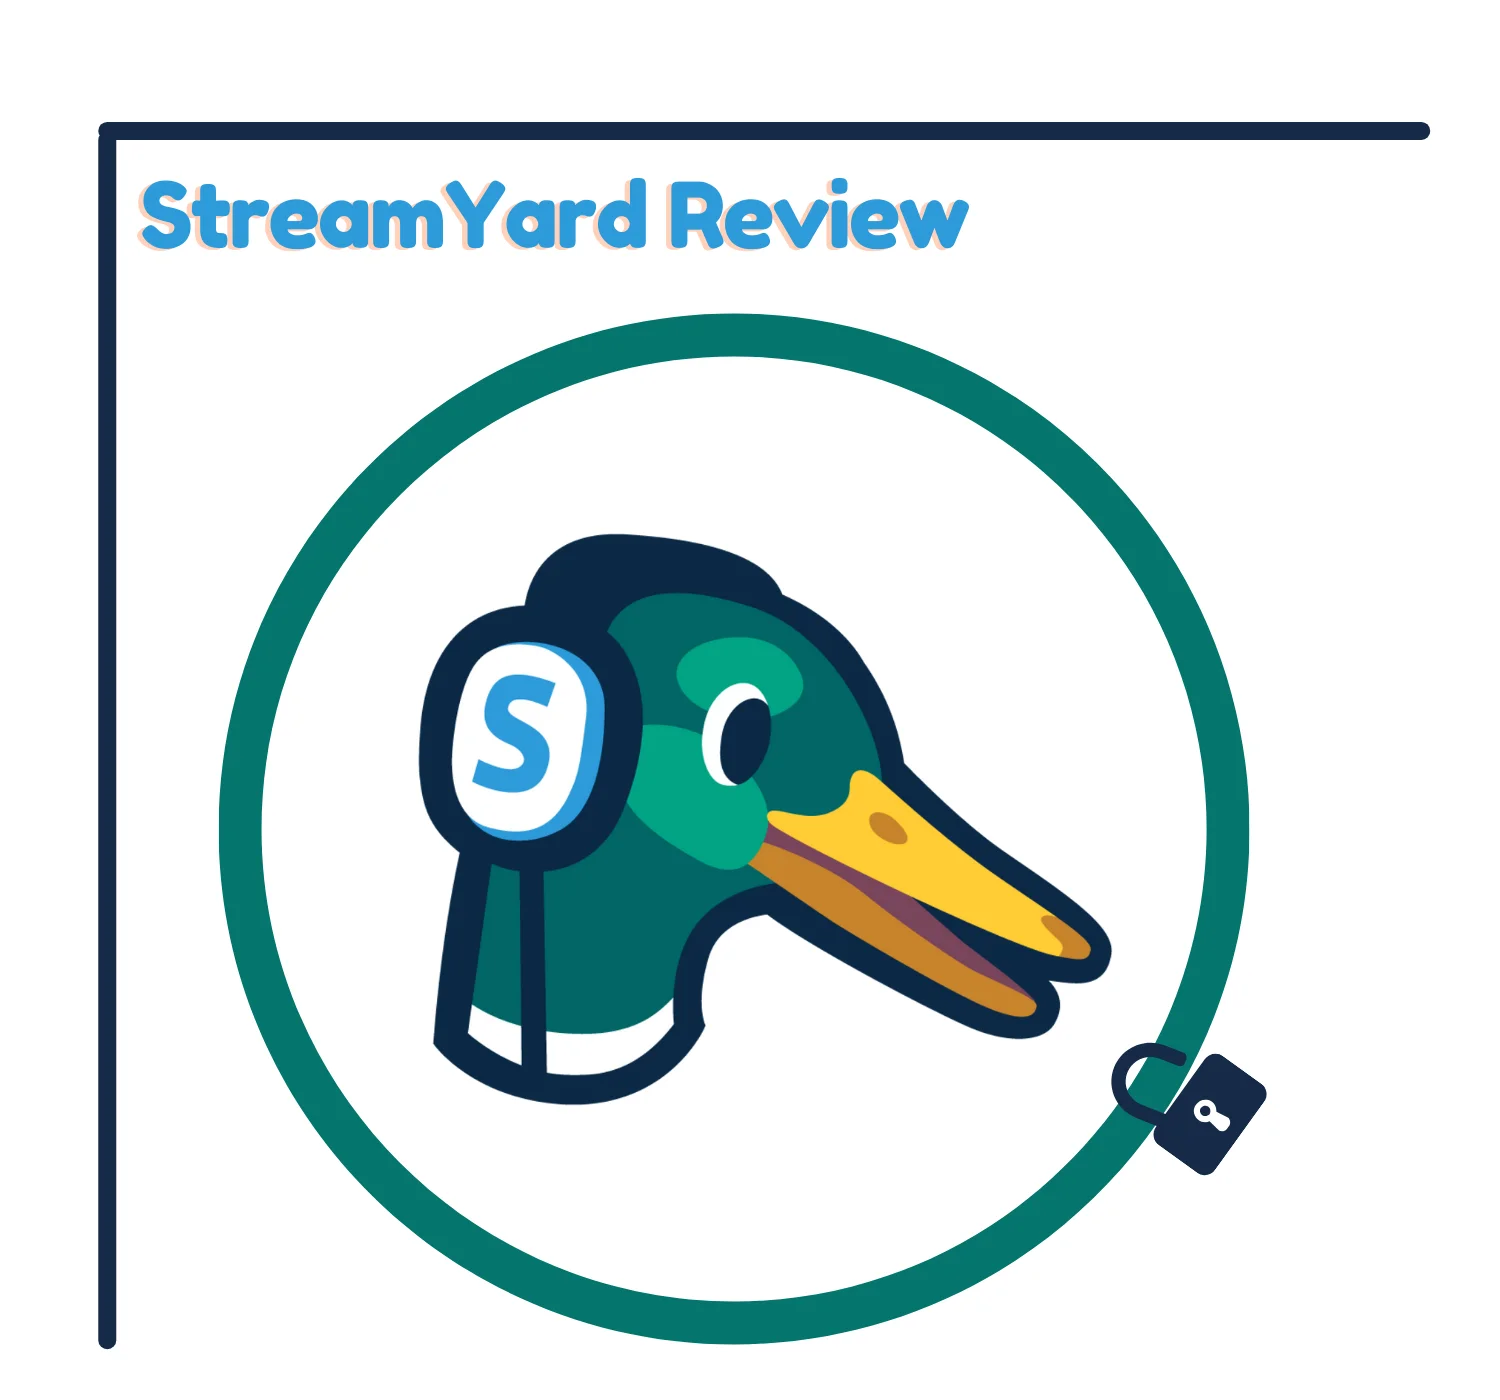 StreamYard Review